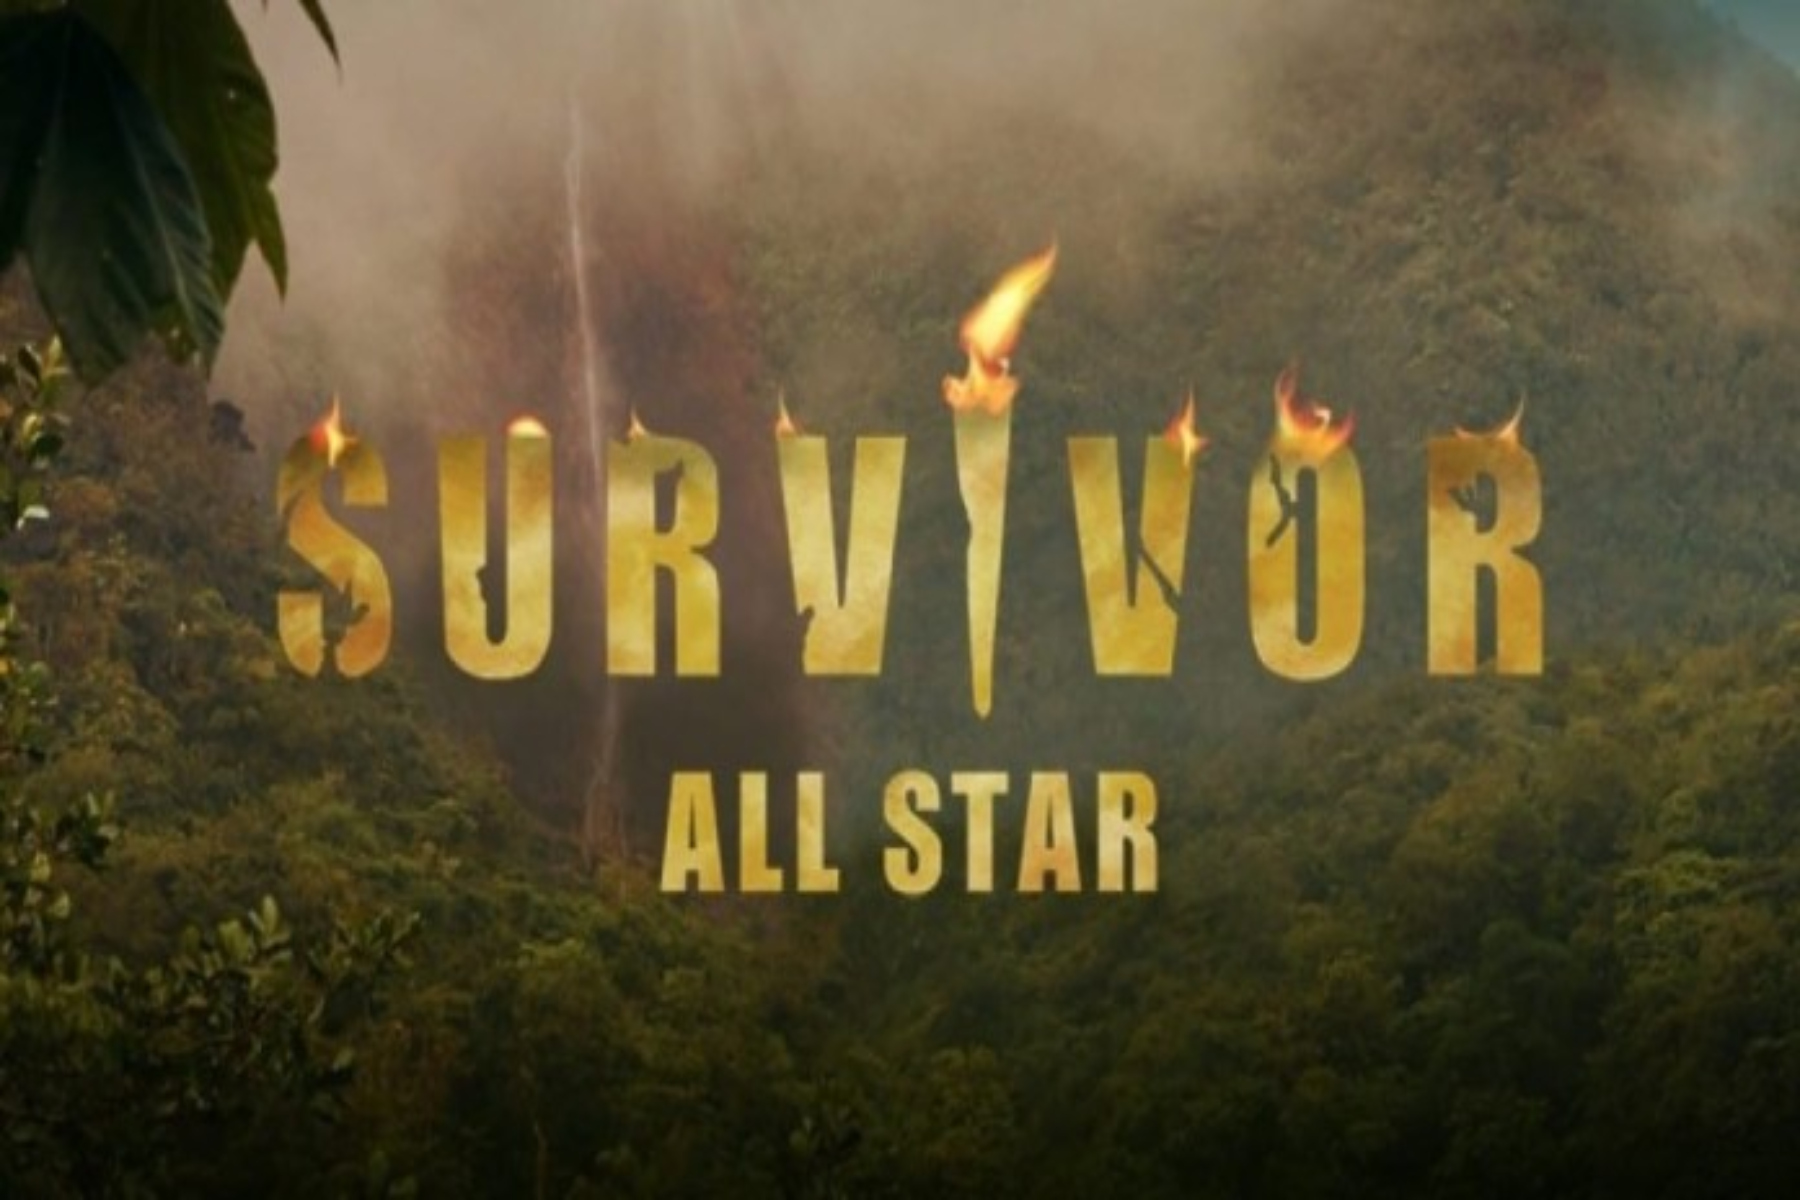 Survivor All Star 03/03: Σήμερα θα προβληθεί το επεισόδιο του Survivor All Star [trailer]